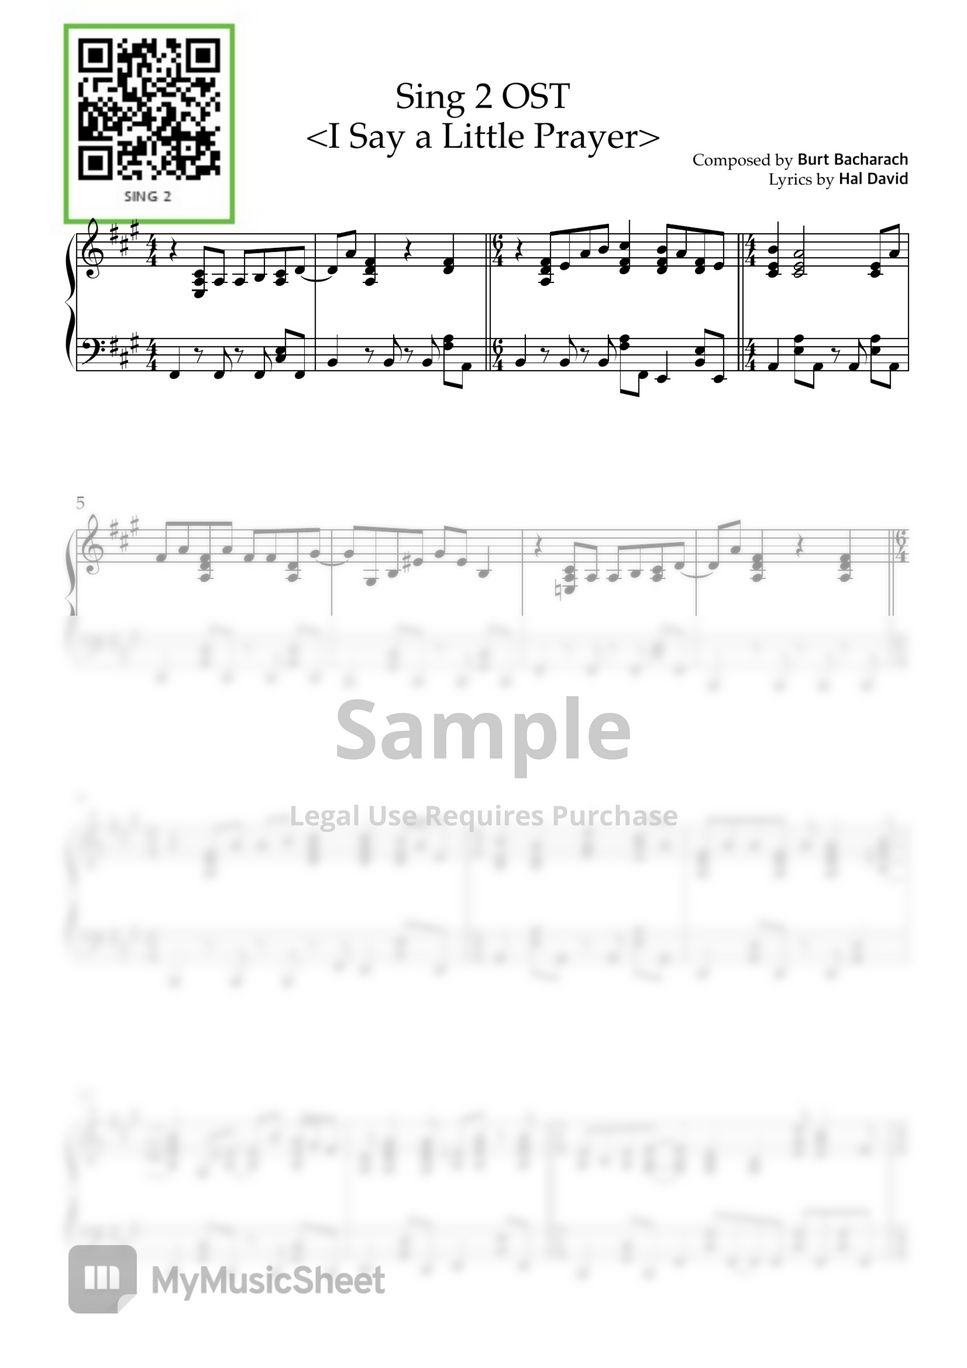 Burt Bacharach - Sing2 OST - I Say a Little Prayer (PIANO SOLO) by 구름사다리뮤직 CLOUD LADDER